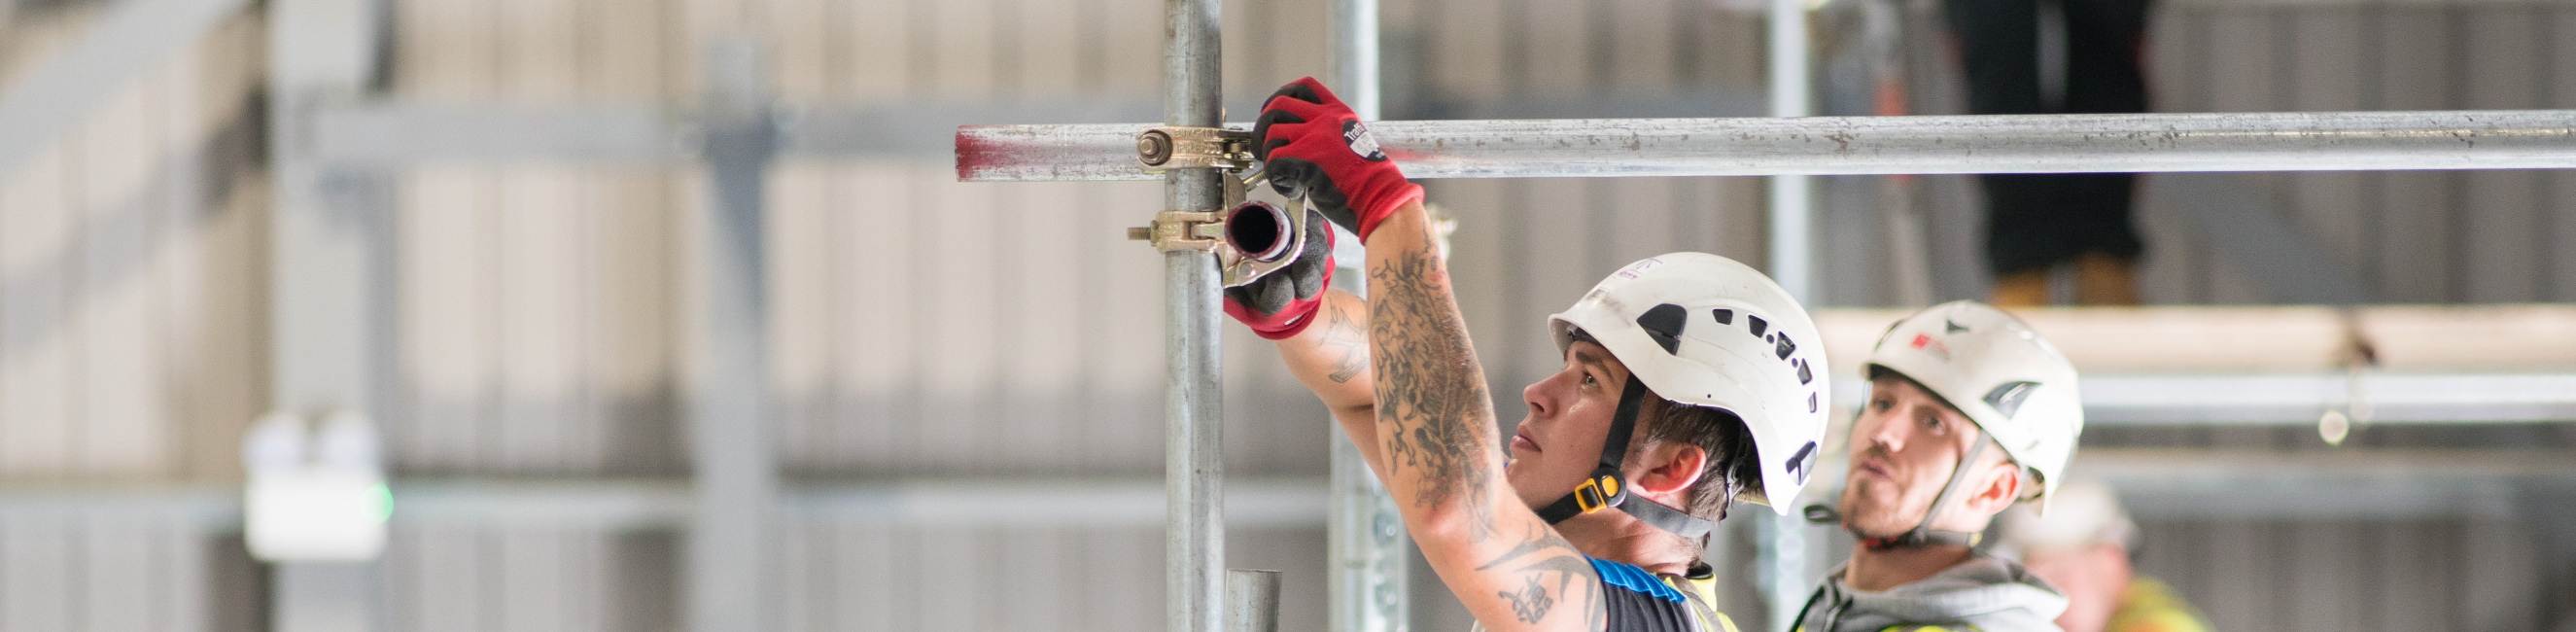 Scaffolding apprentice builds scaffold